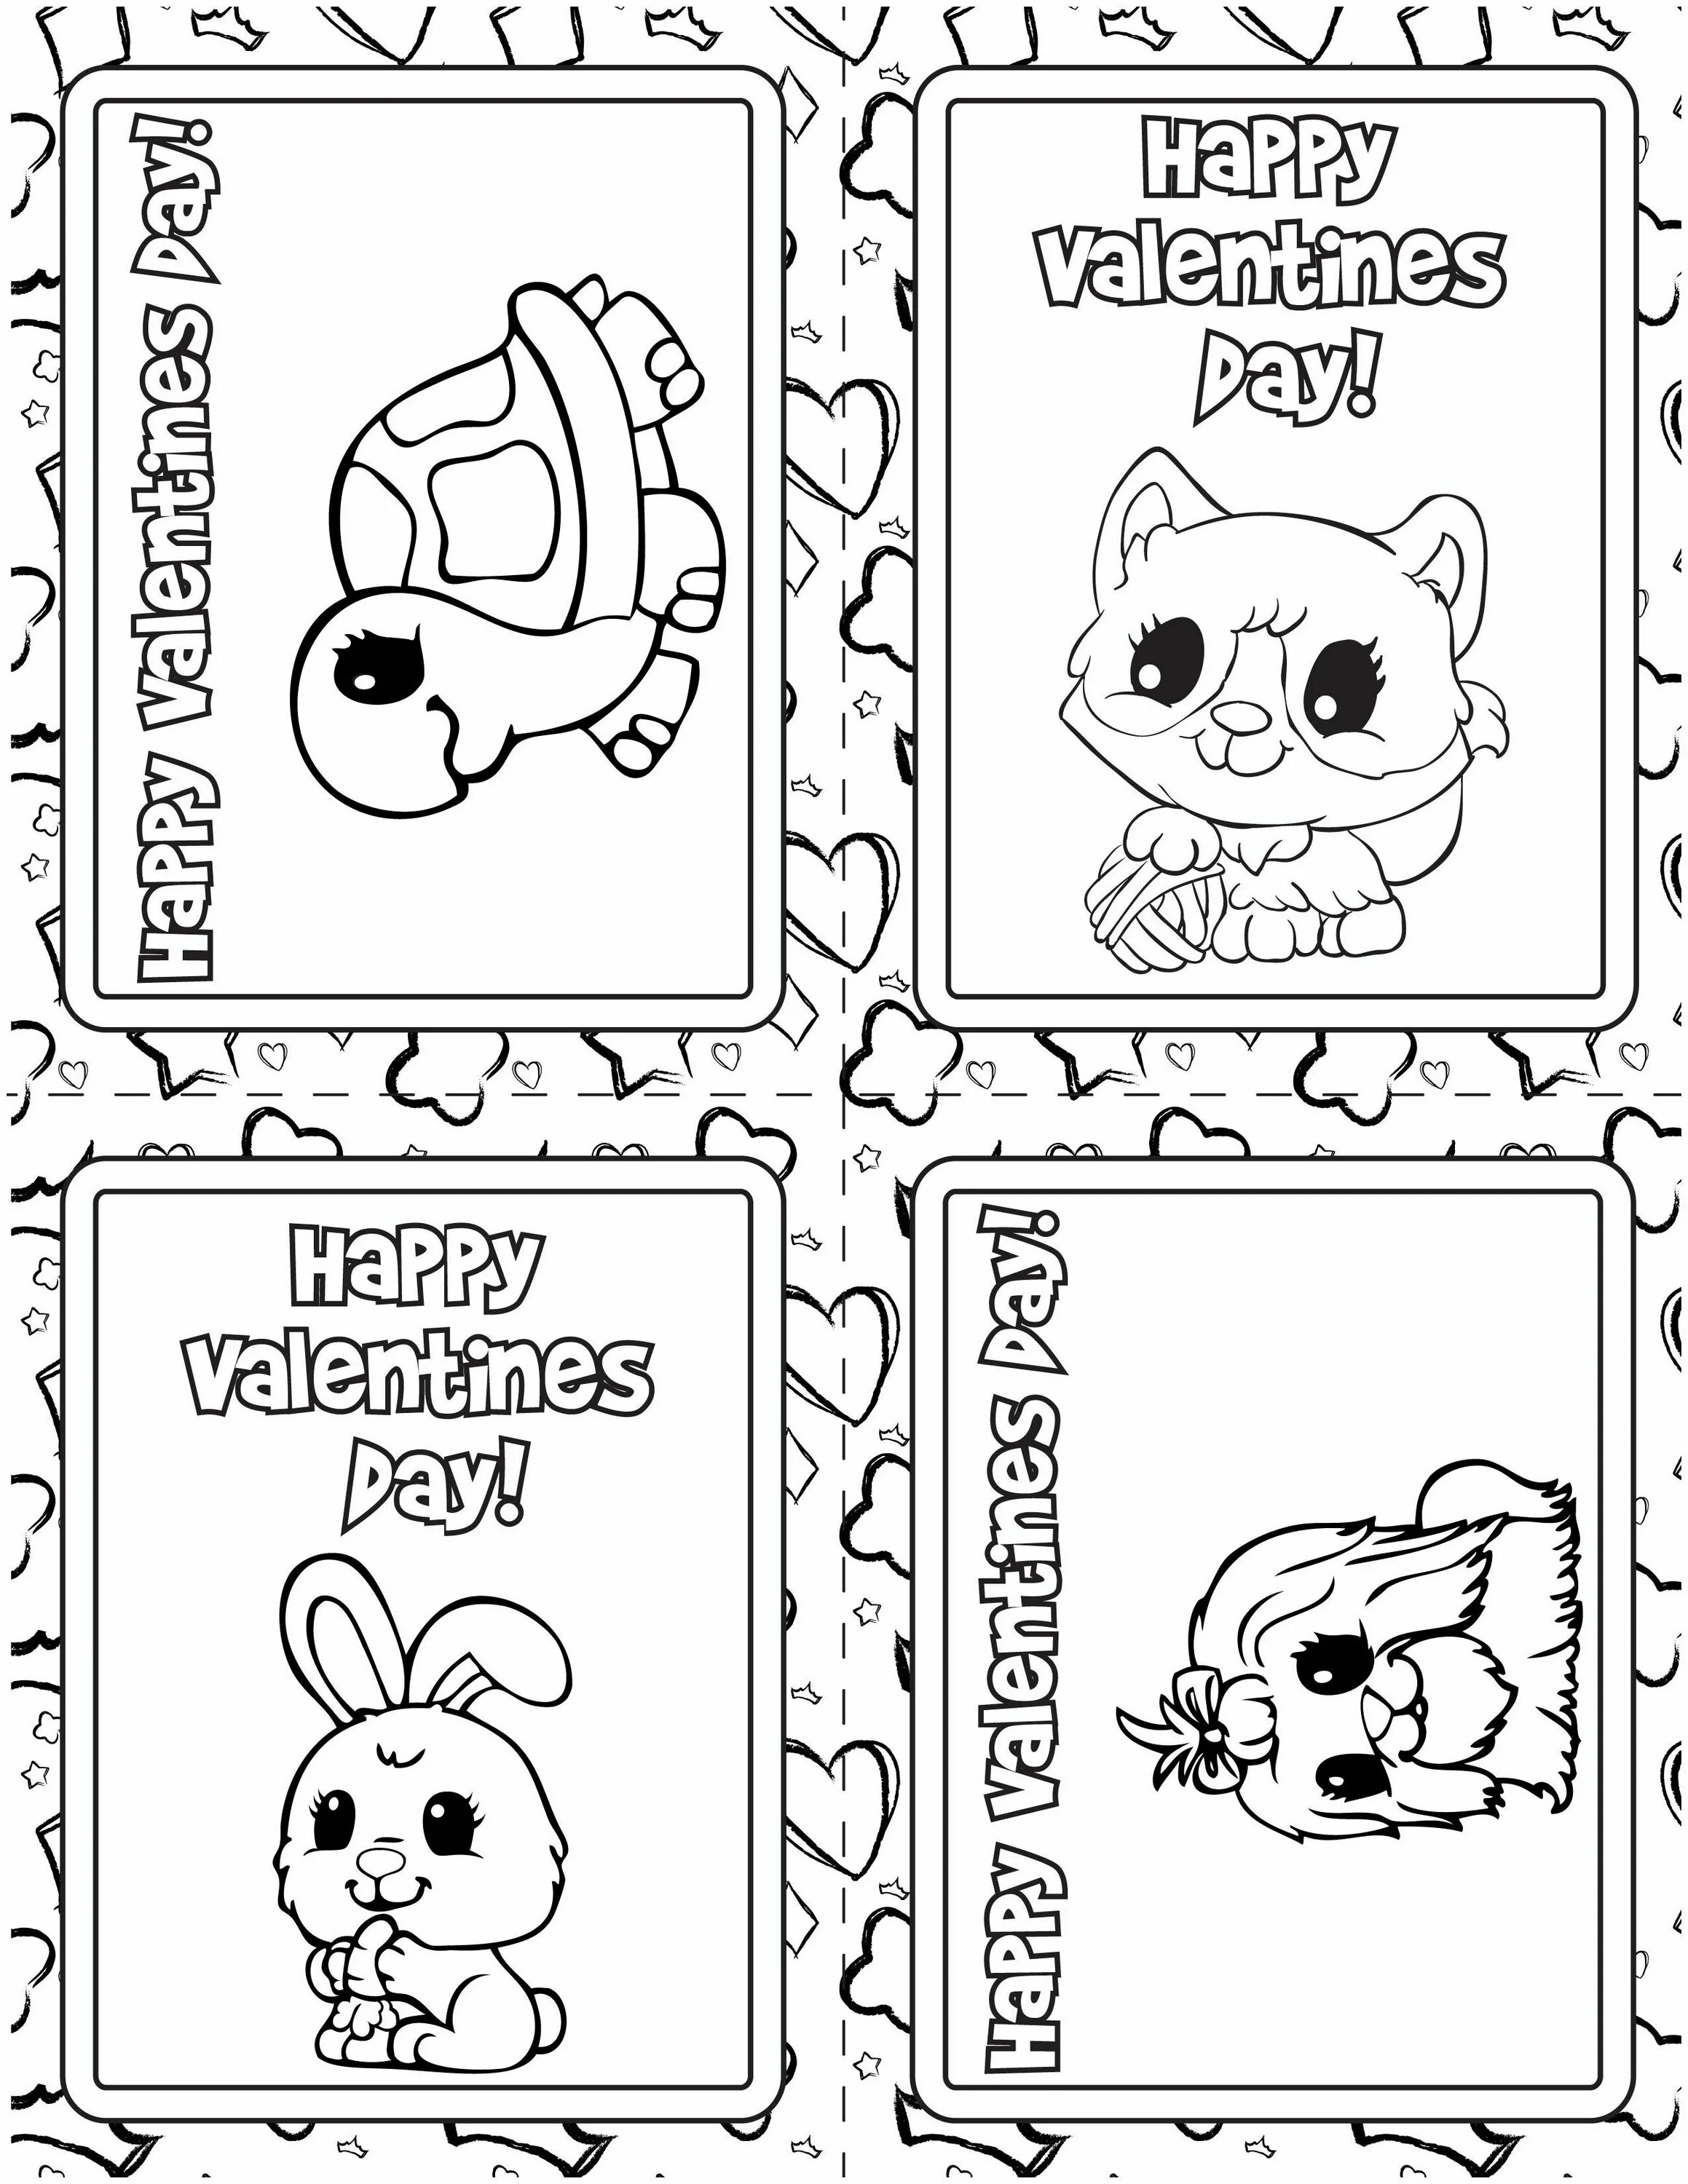 Printable cards. Valentine Cards for Kids раскраска. St Valentines Cards раскраски. St Valentine's Day Cards Printable. St Valentines Cards for Kids.